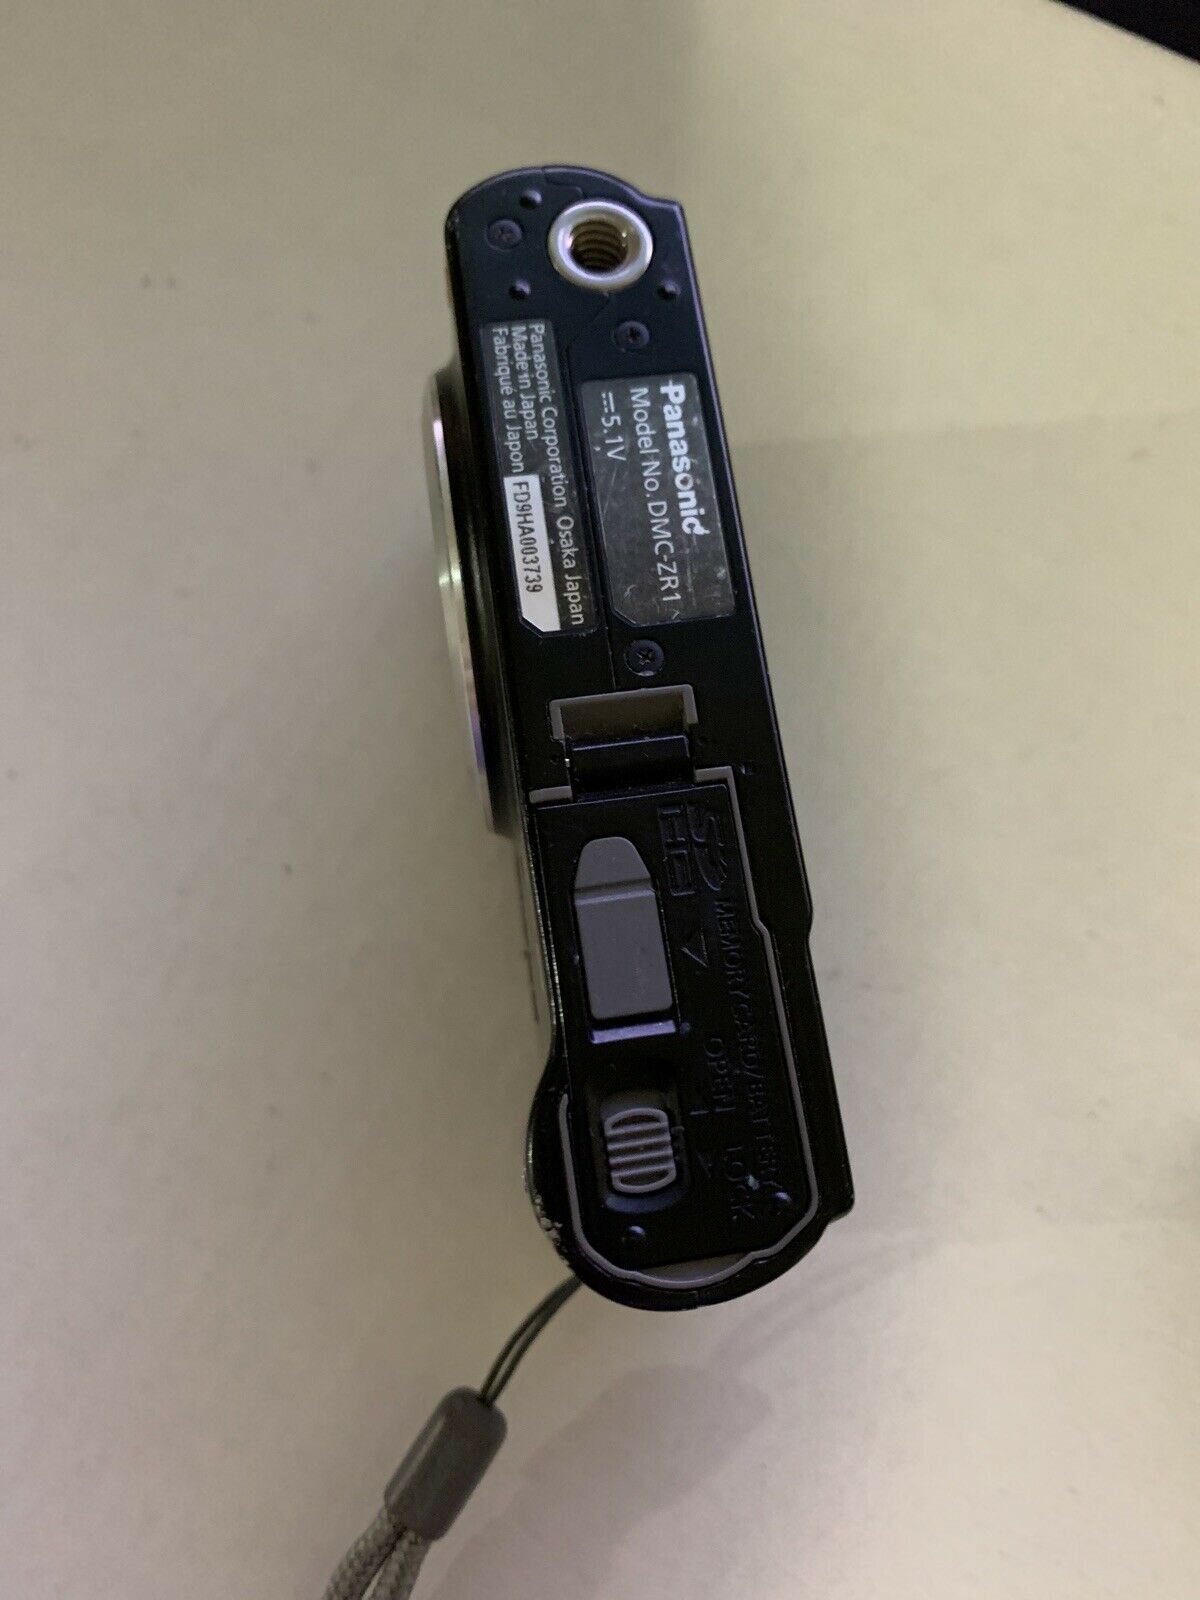 Panasonic Lumix DMC-ZR1 Digital Camera 8x 12MP Optical Zoom With USB Charger